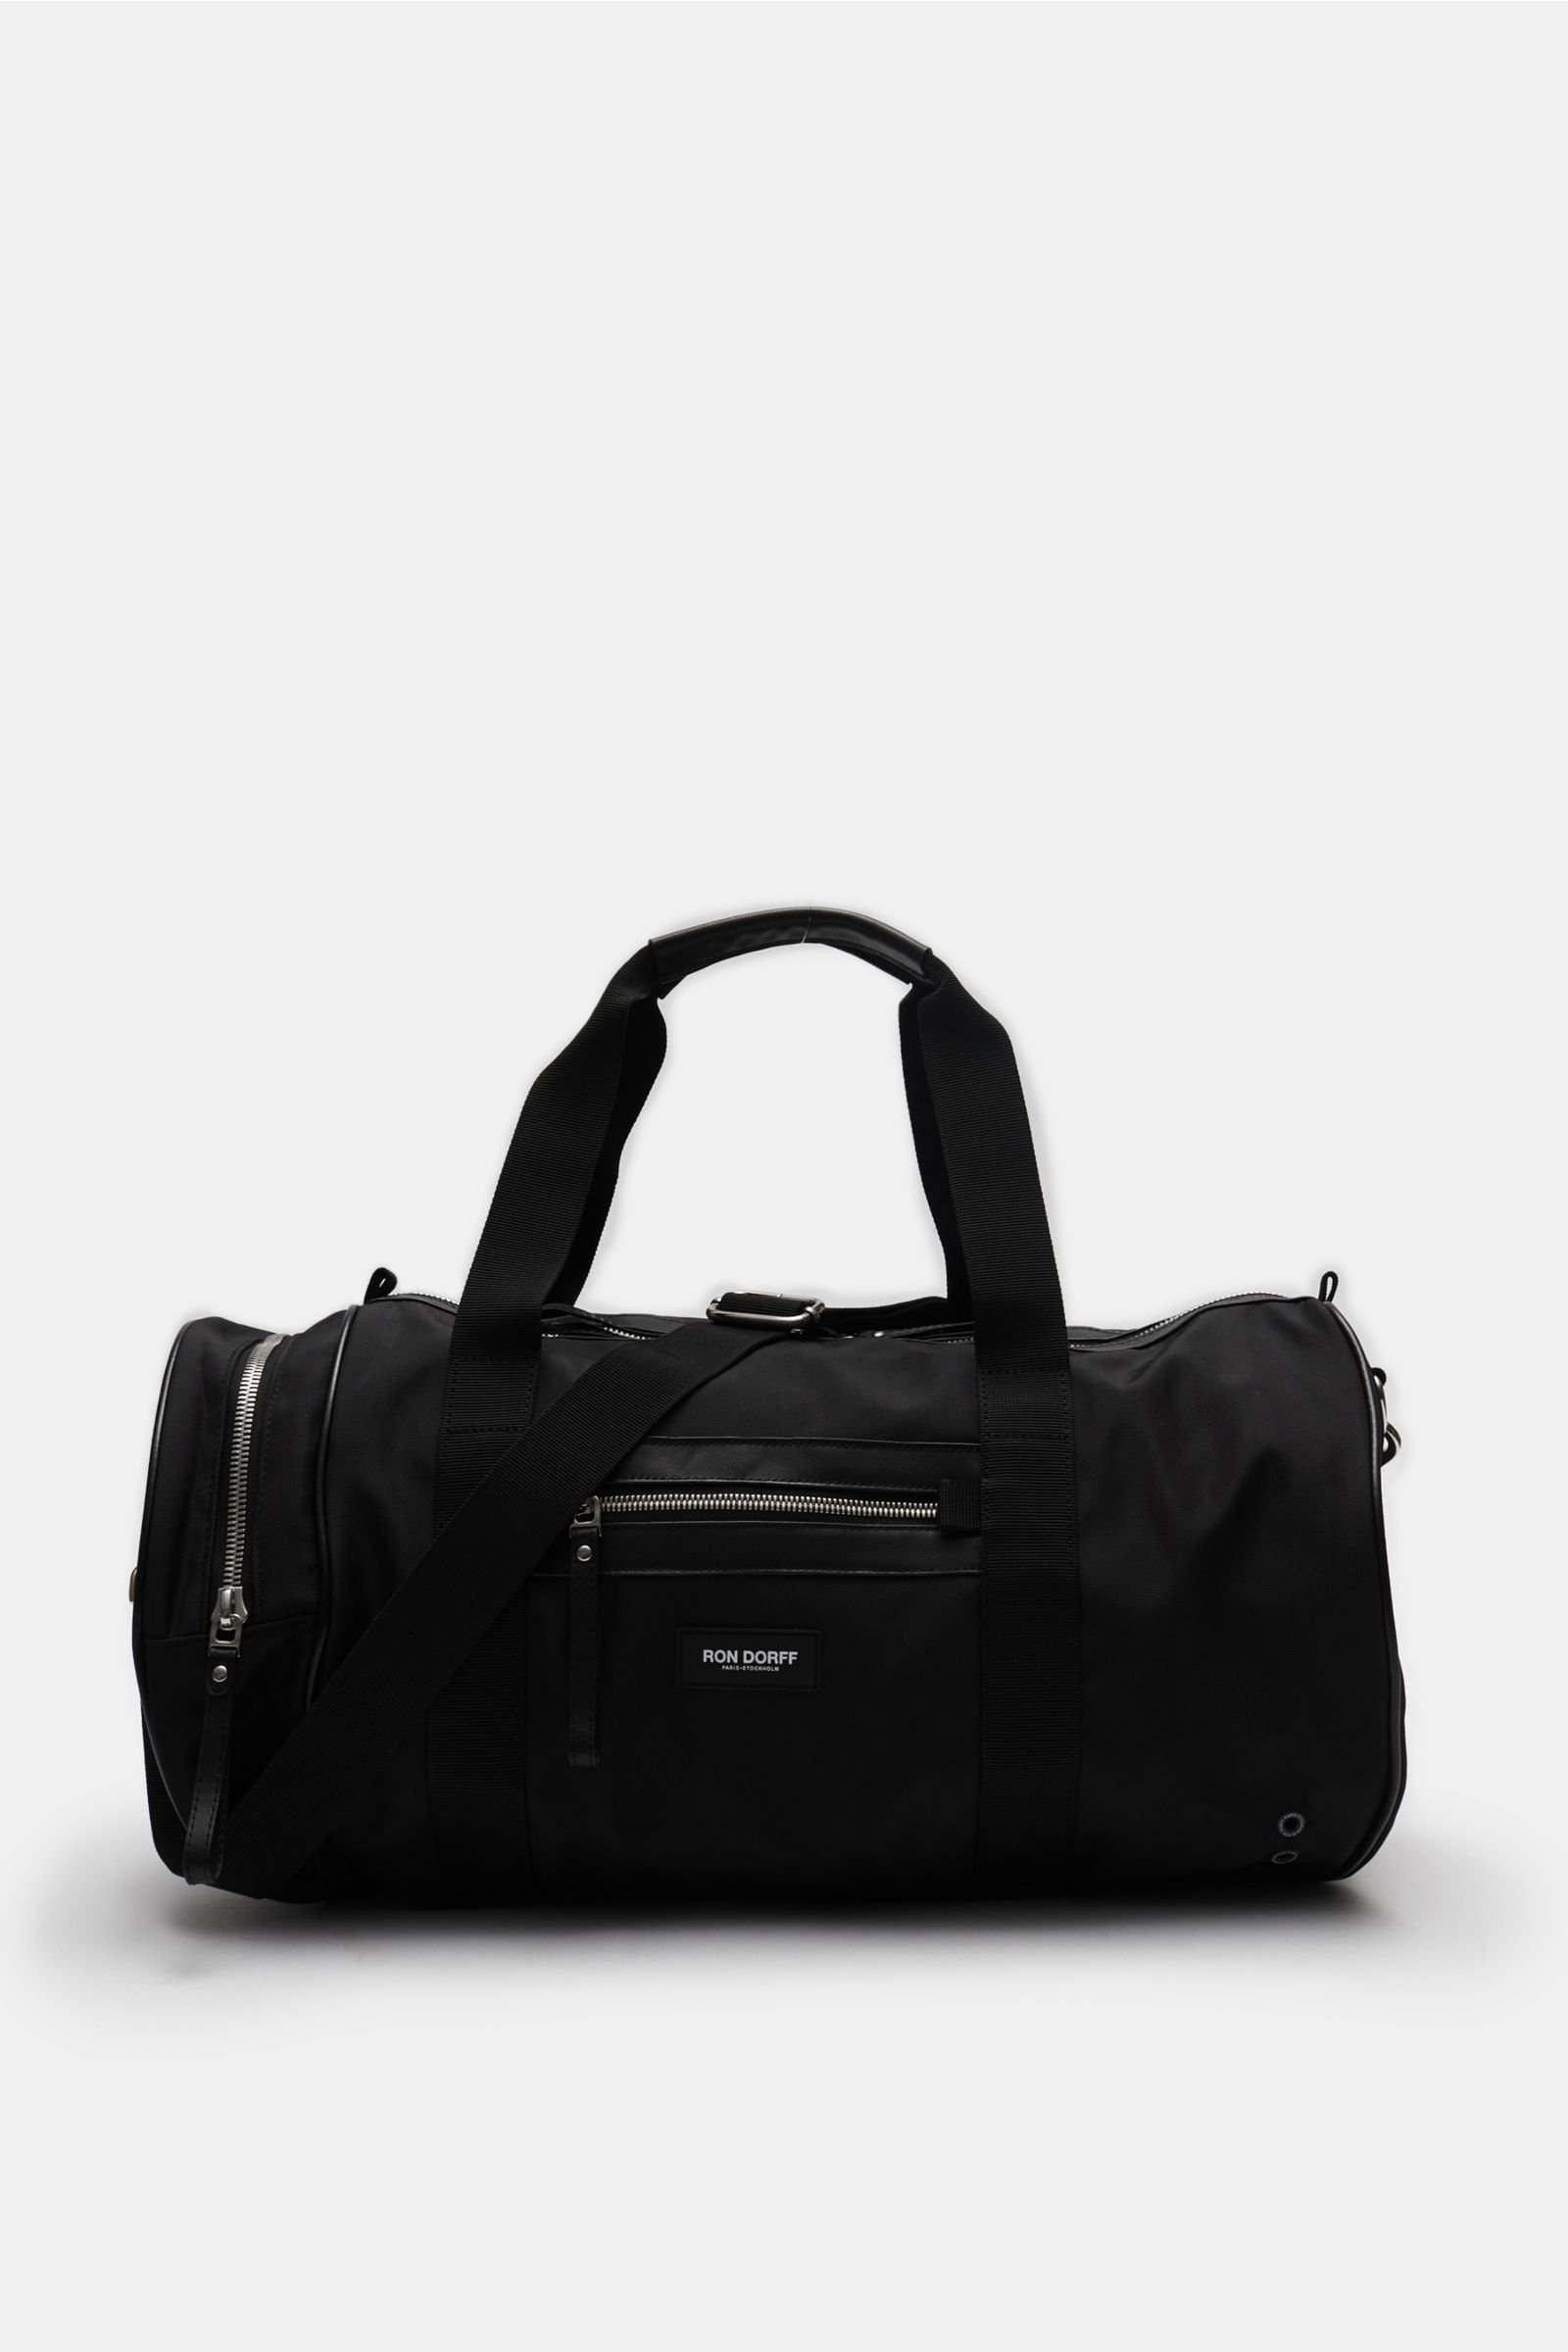 Sports bag 'Tube Bag' black